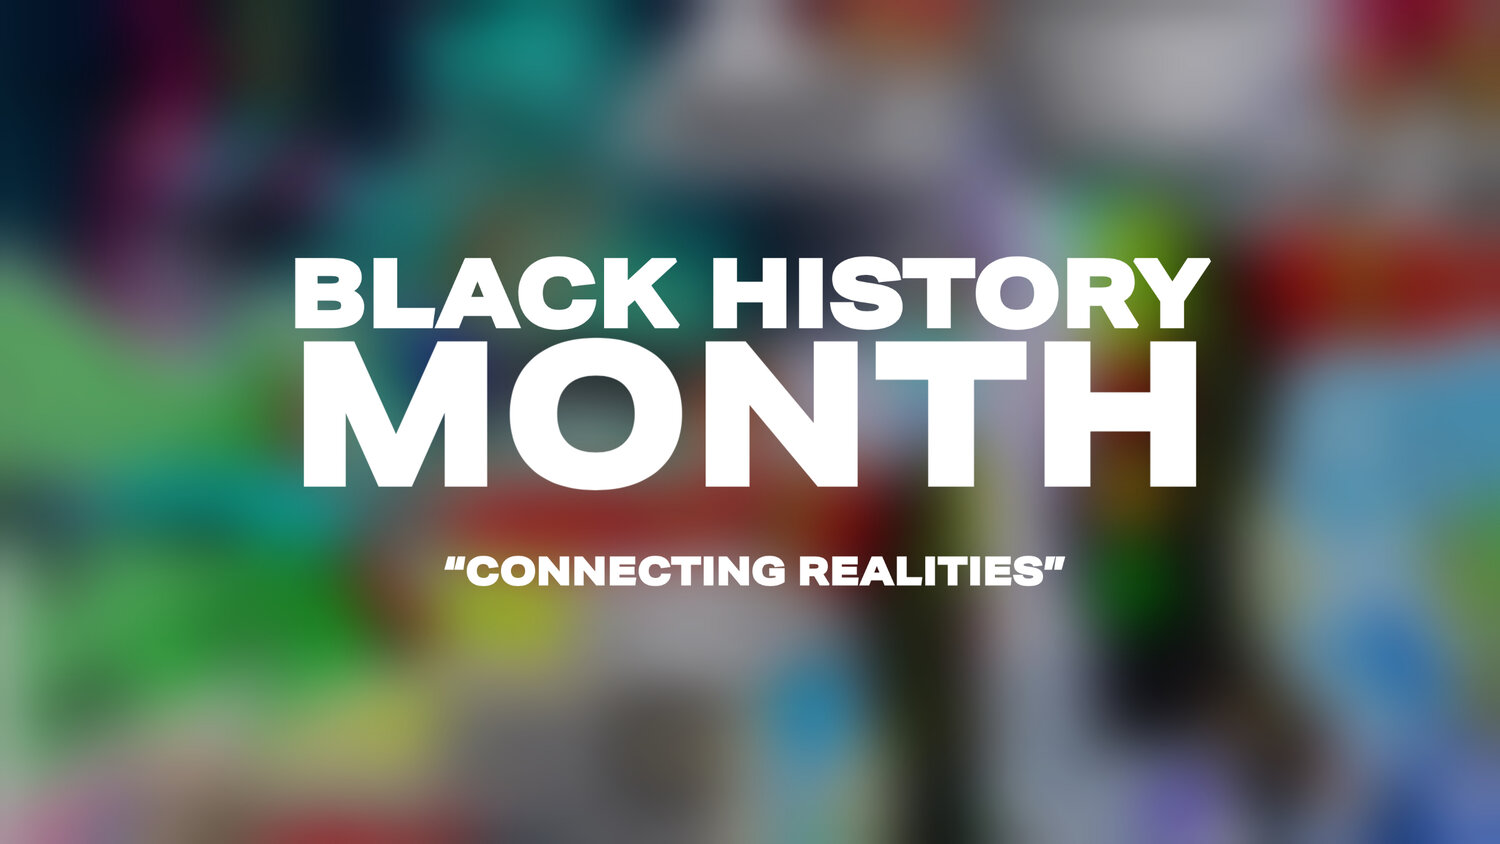  Black History Month 2021 - Self Enhancement, Inc.